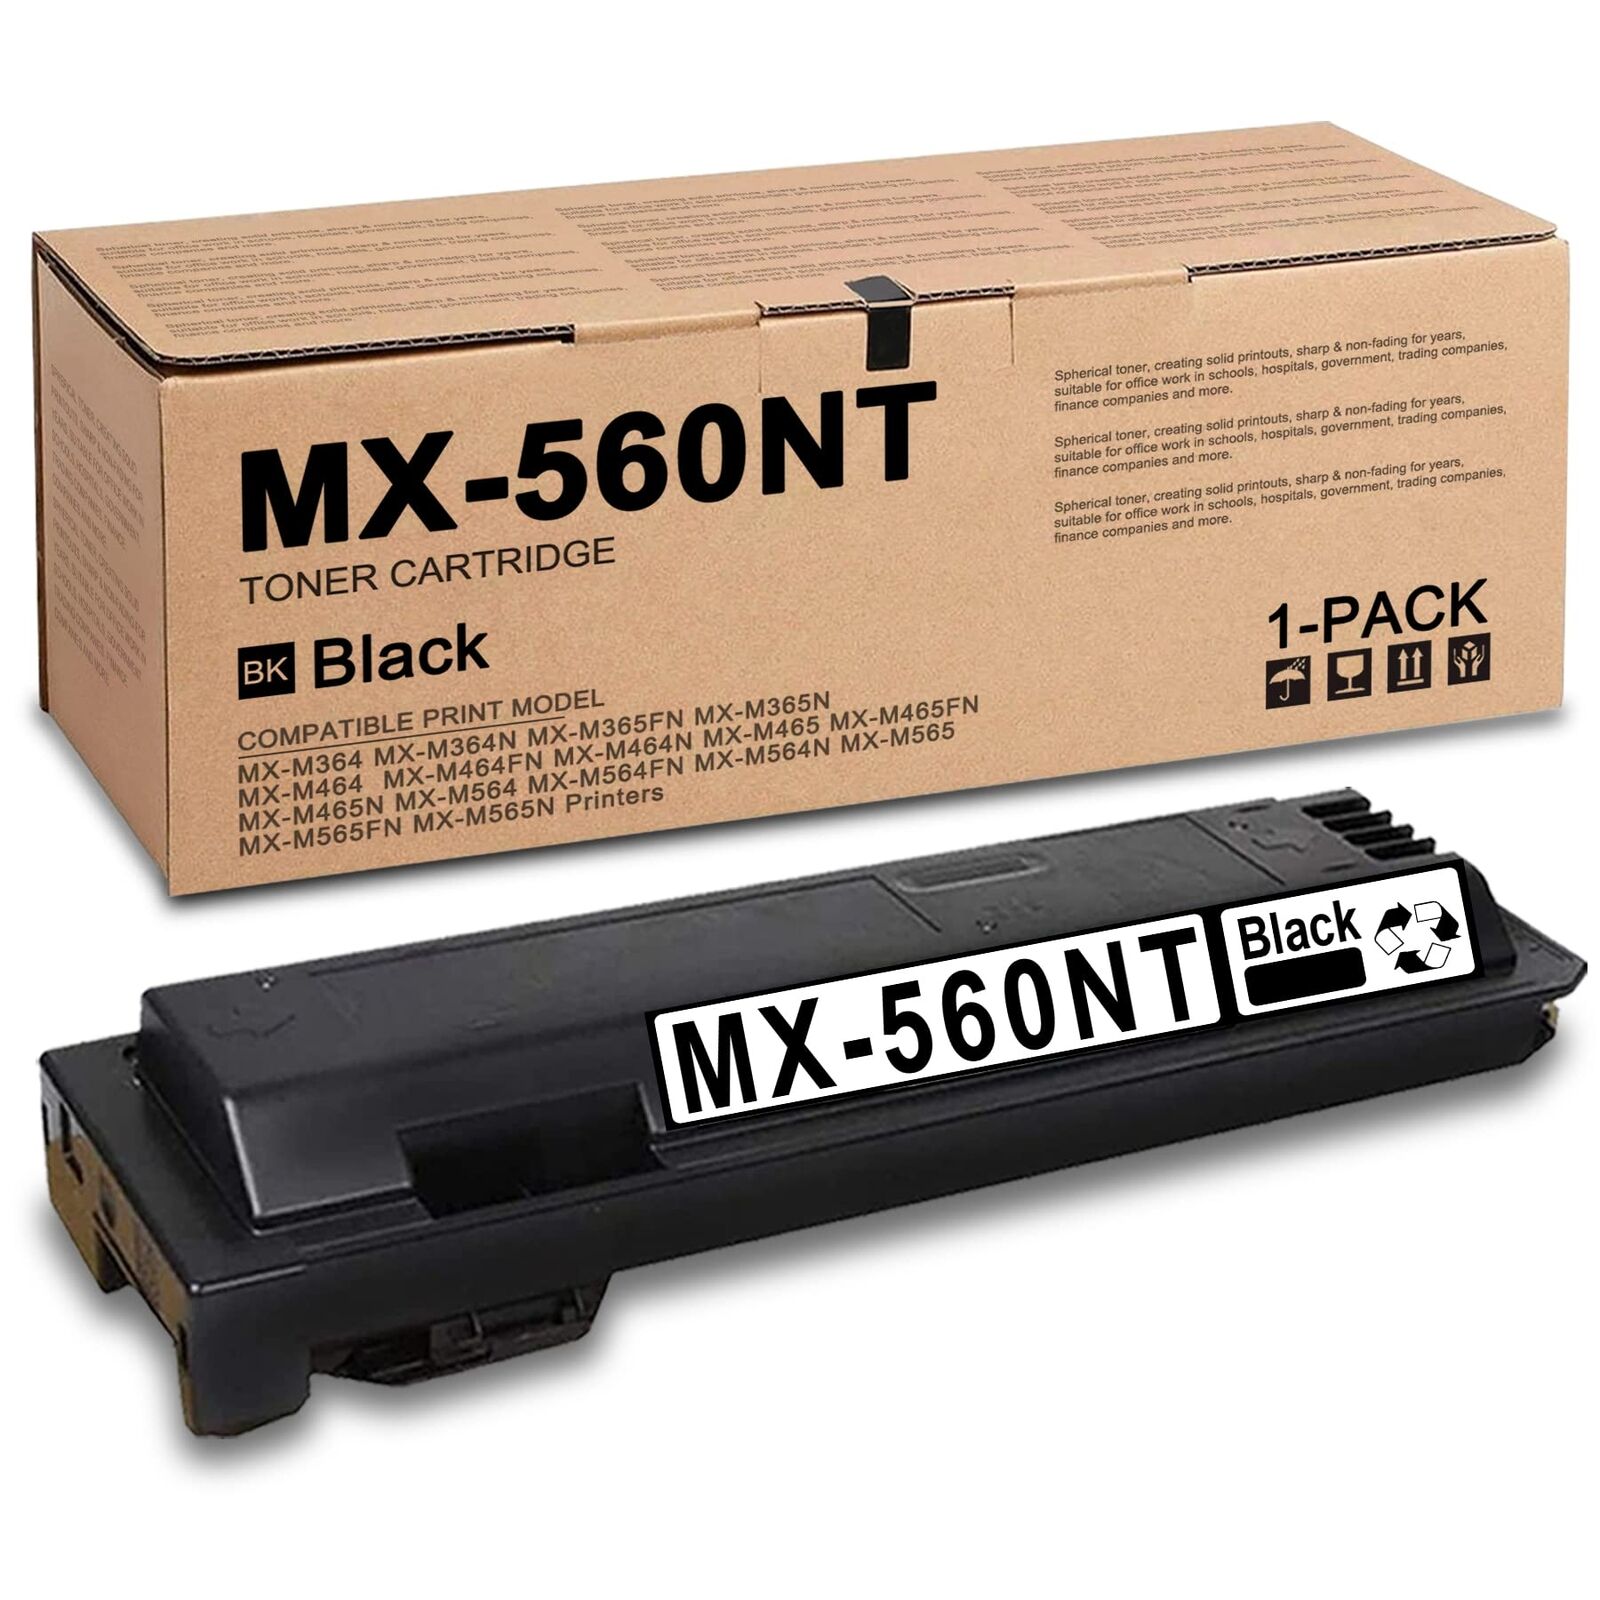 MX-560NT Black Toner Cartridge Compatible for Sharp MX-M364N M365N Series